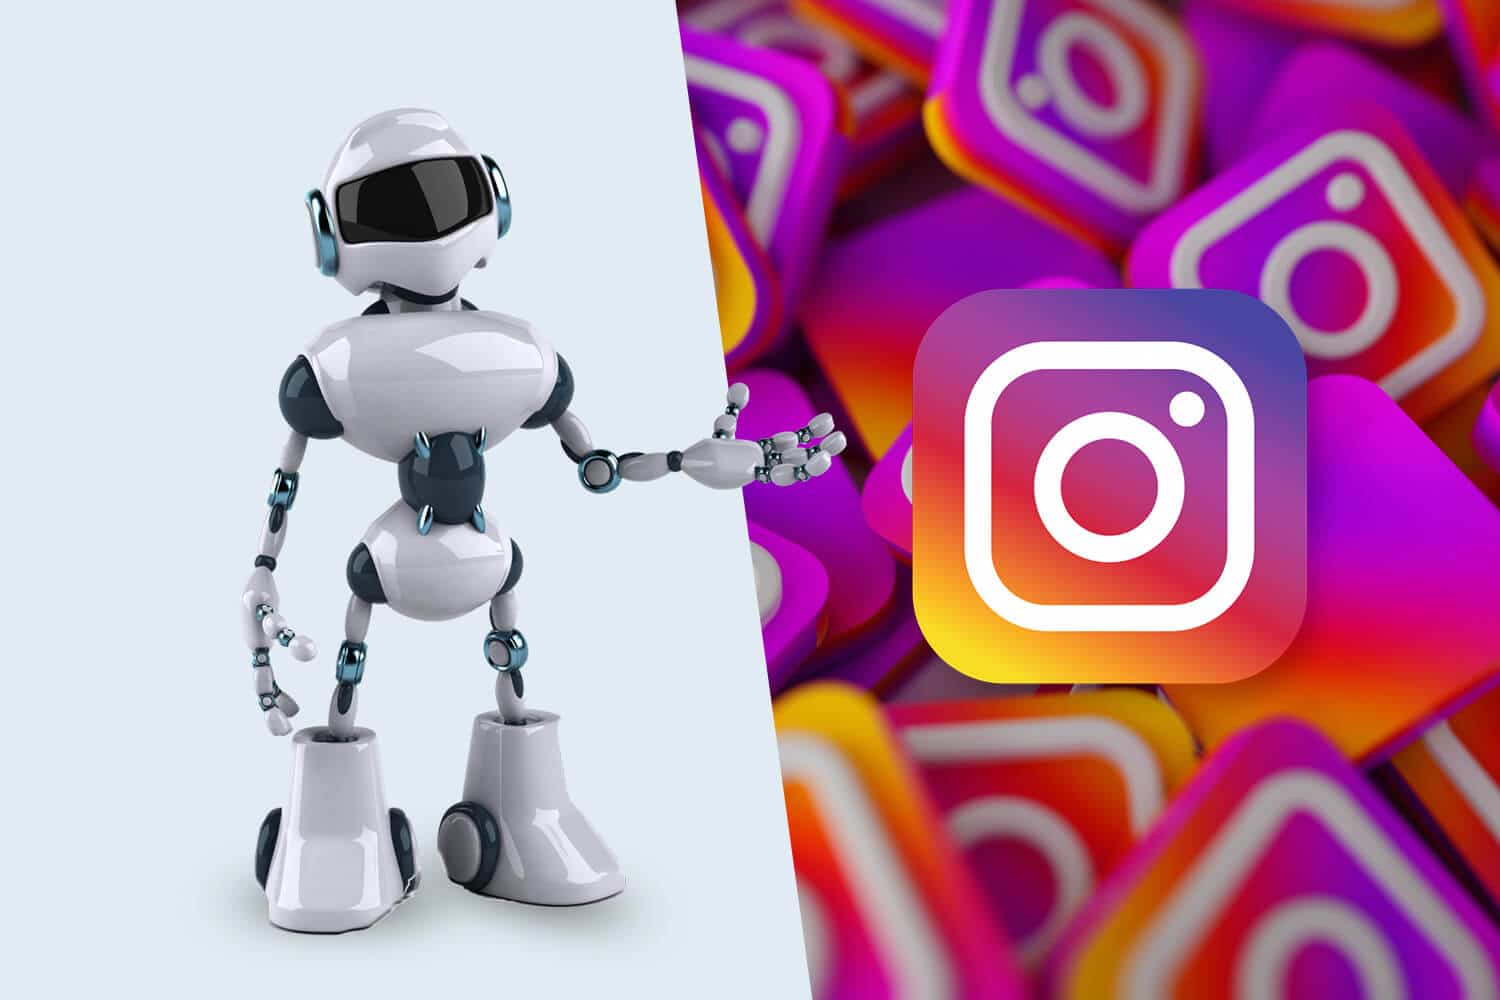 instagram bots